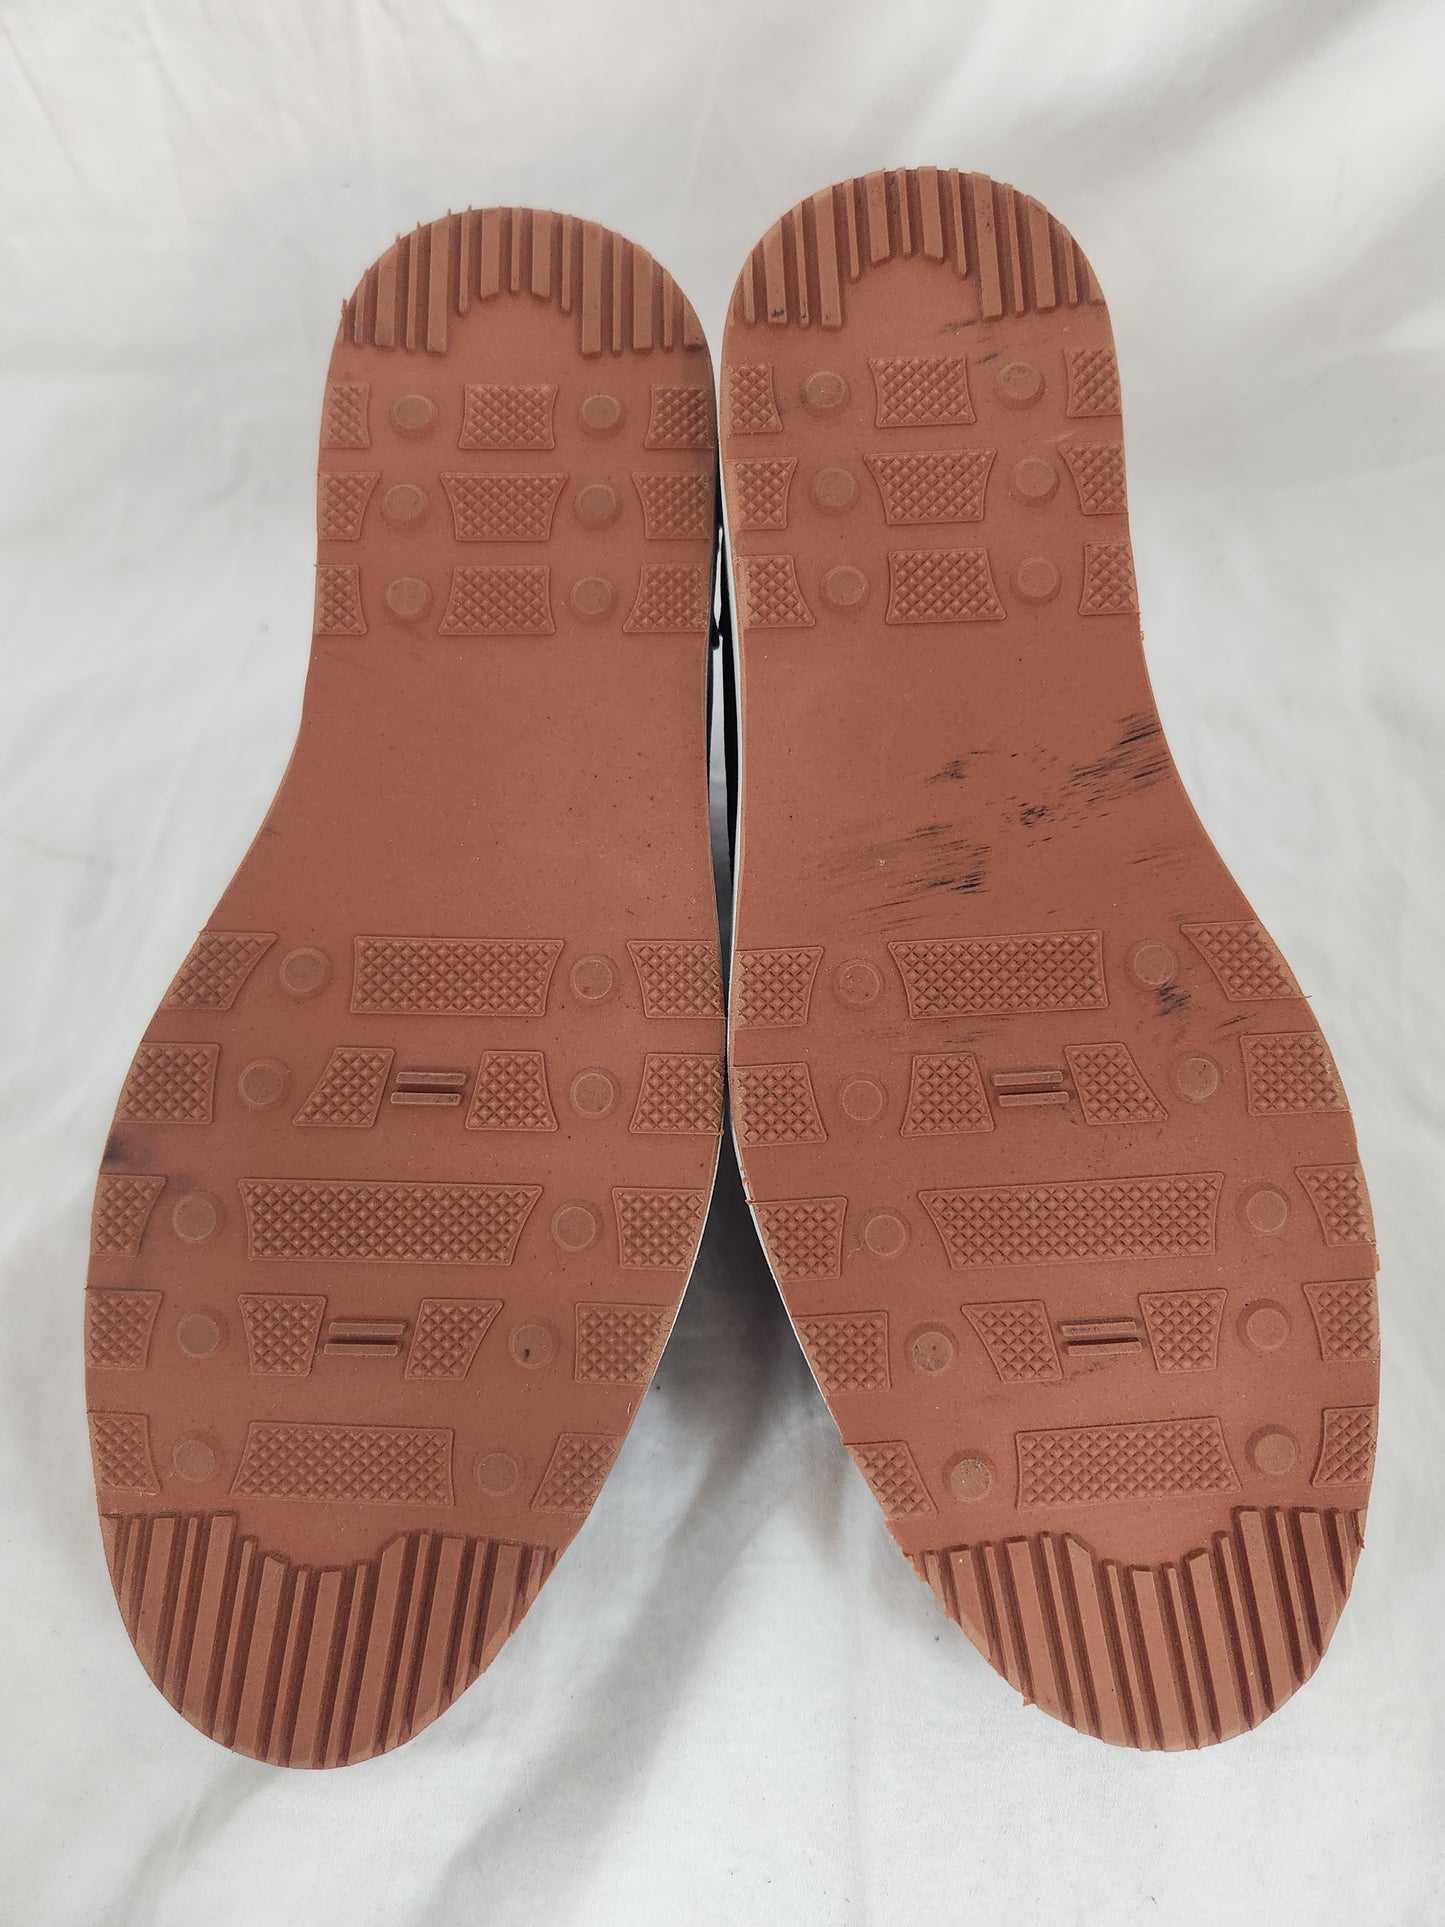 Ferro Aldo Houstan Brown Casual Mid-Top Shoes - Size: 8